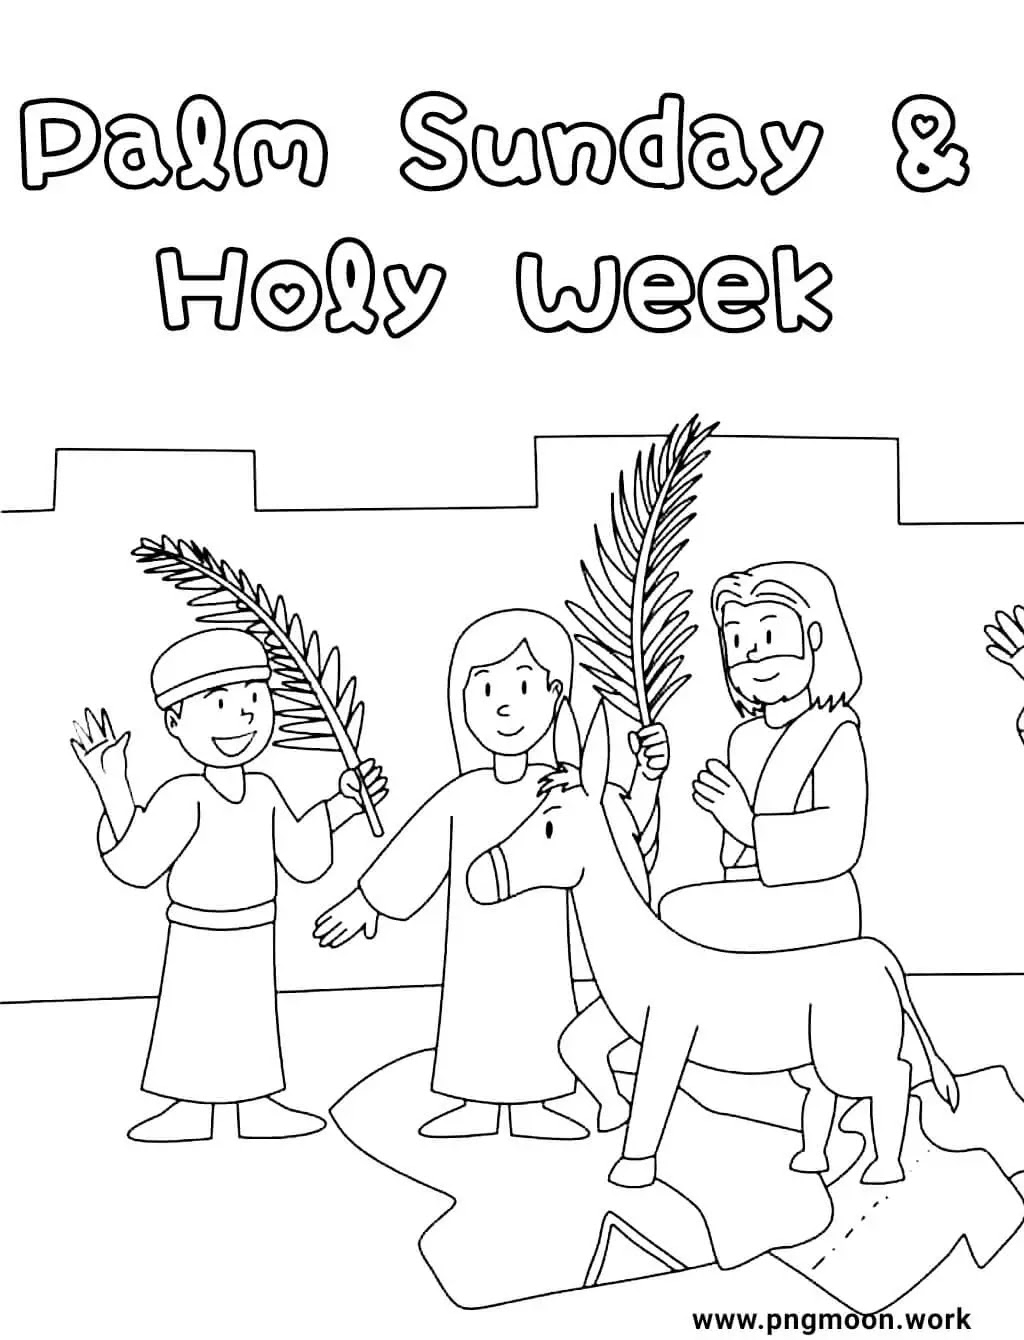 palm Sunday and holy week